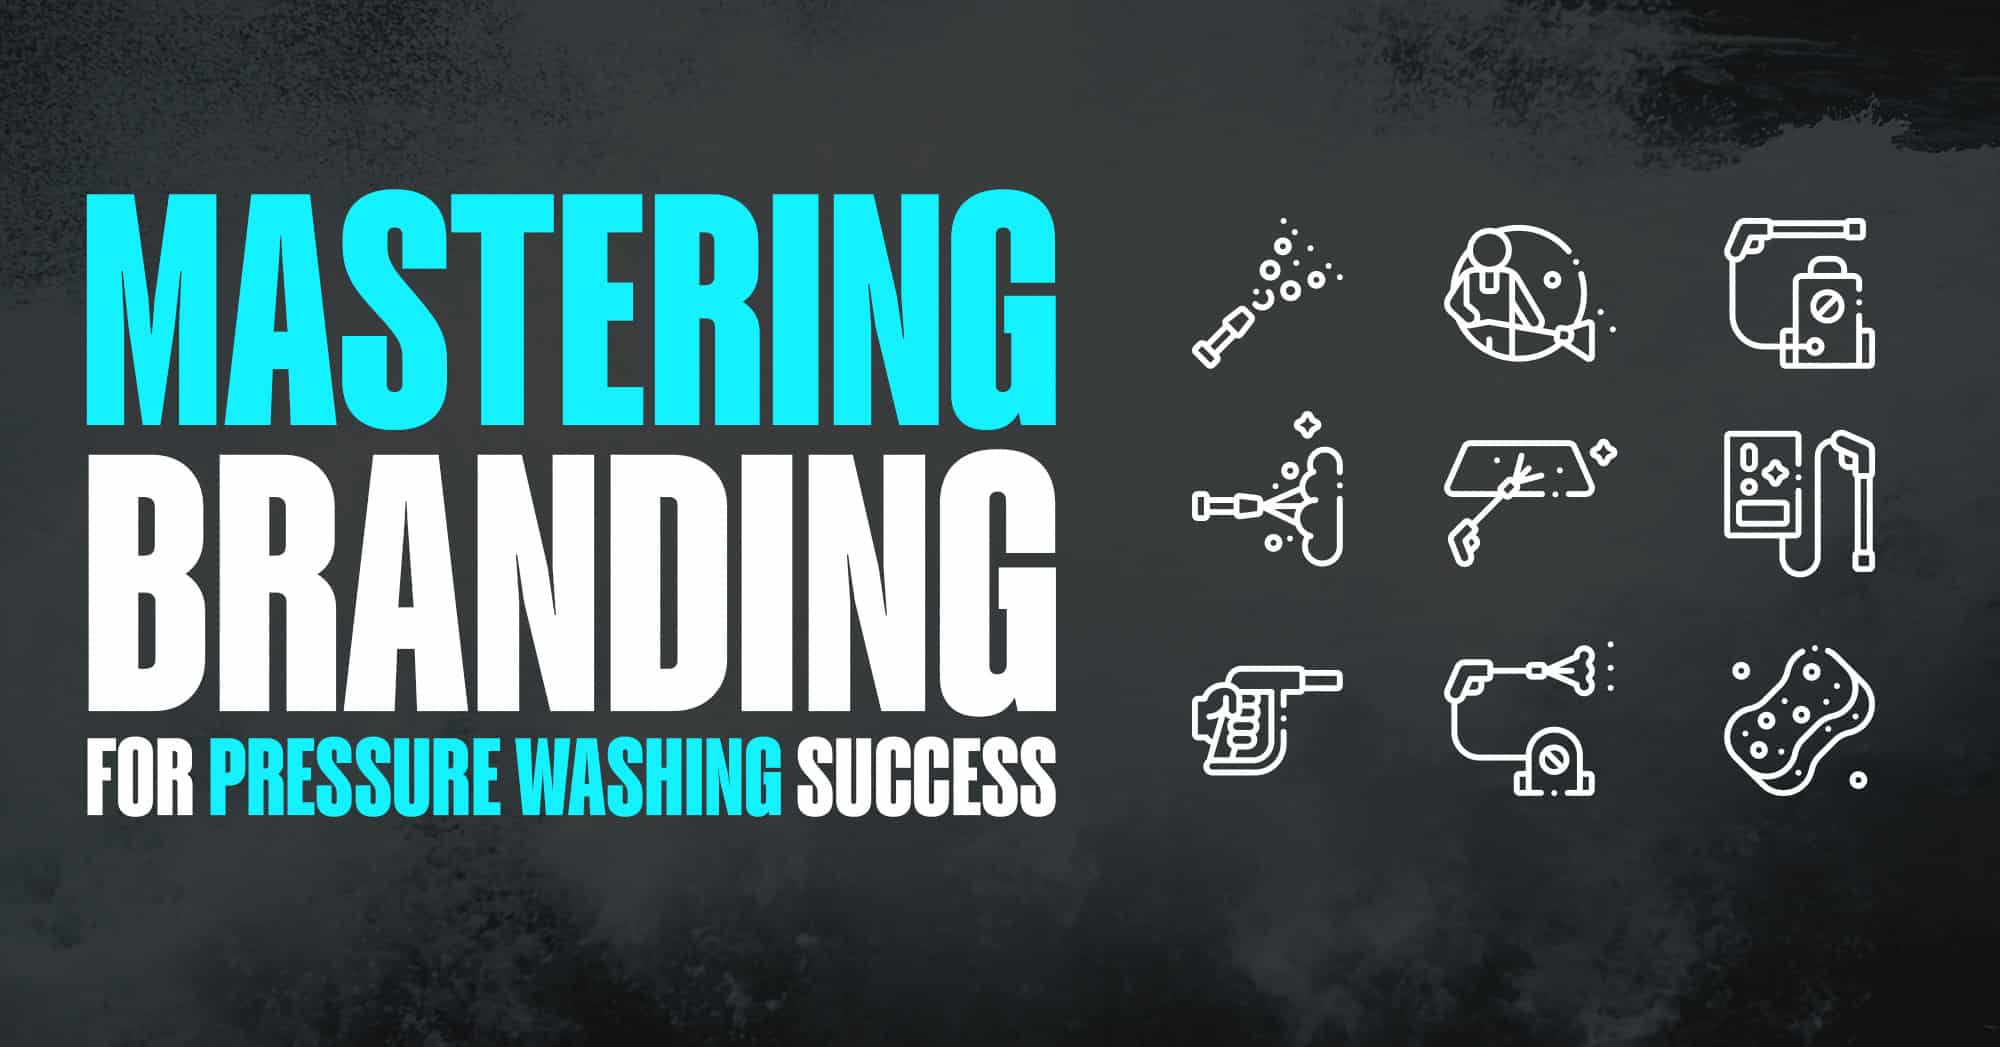 Mastering Branding for Pressure Washing success